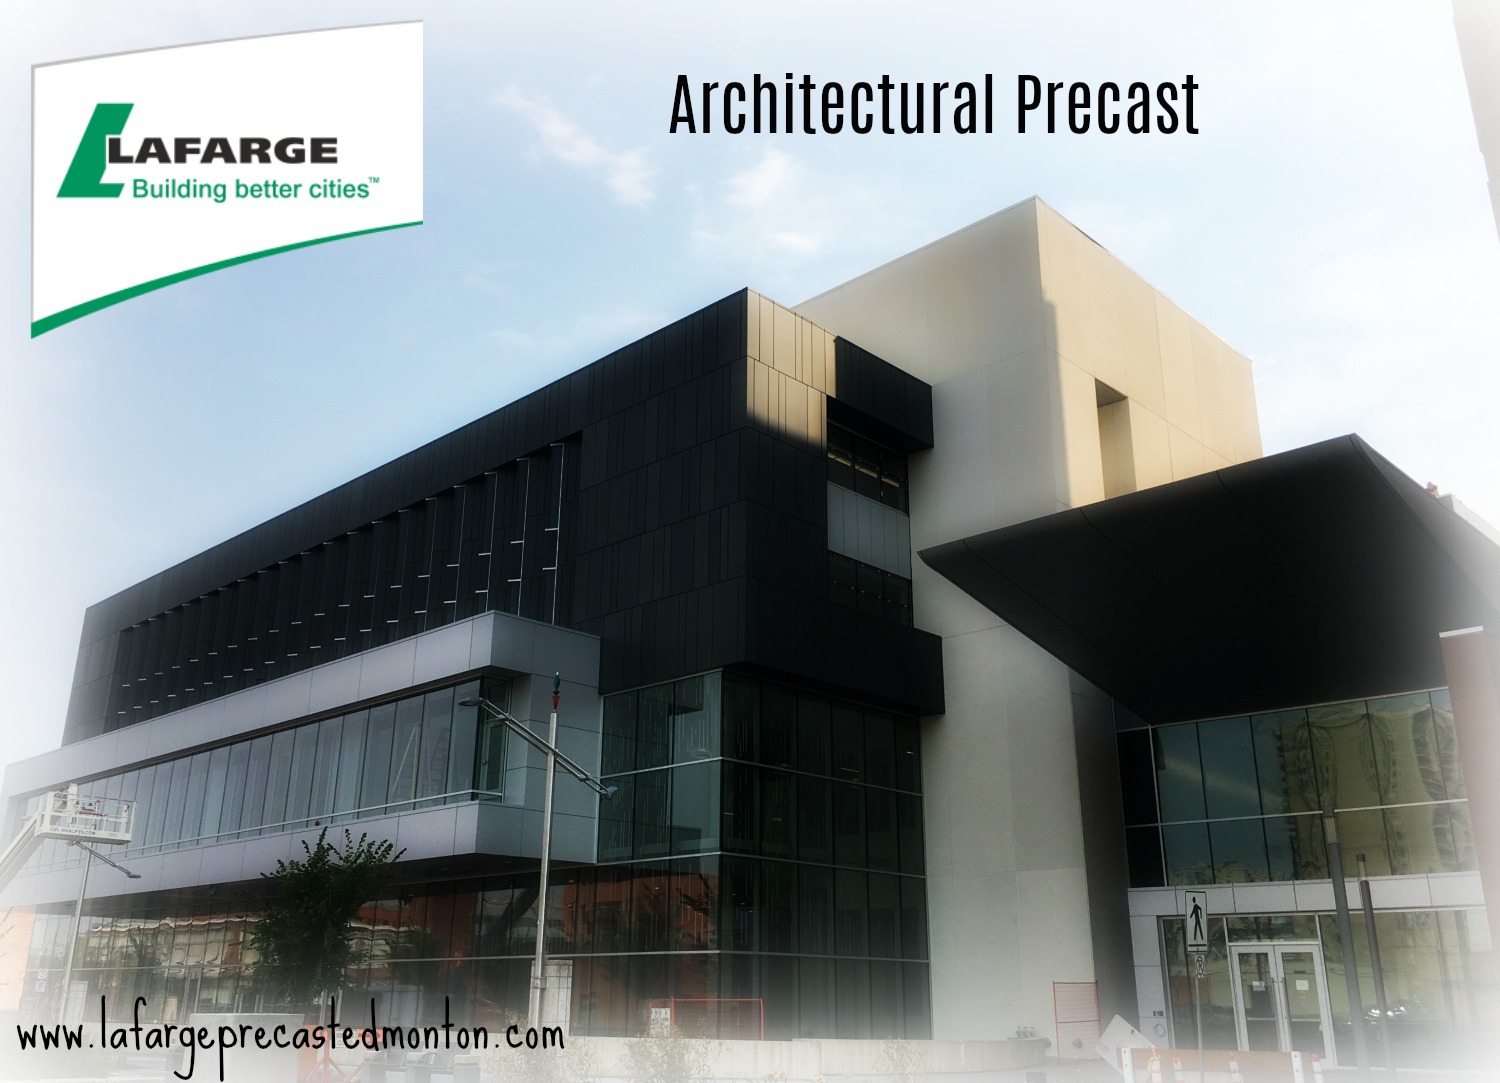 Architectural Precast Designs NorQuest College by Lafarge Precast Edmonton